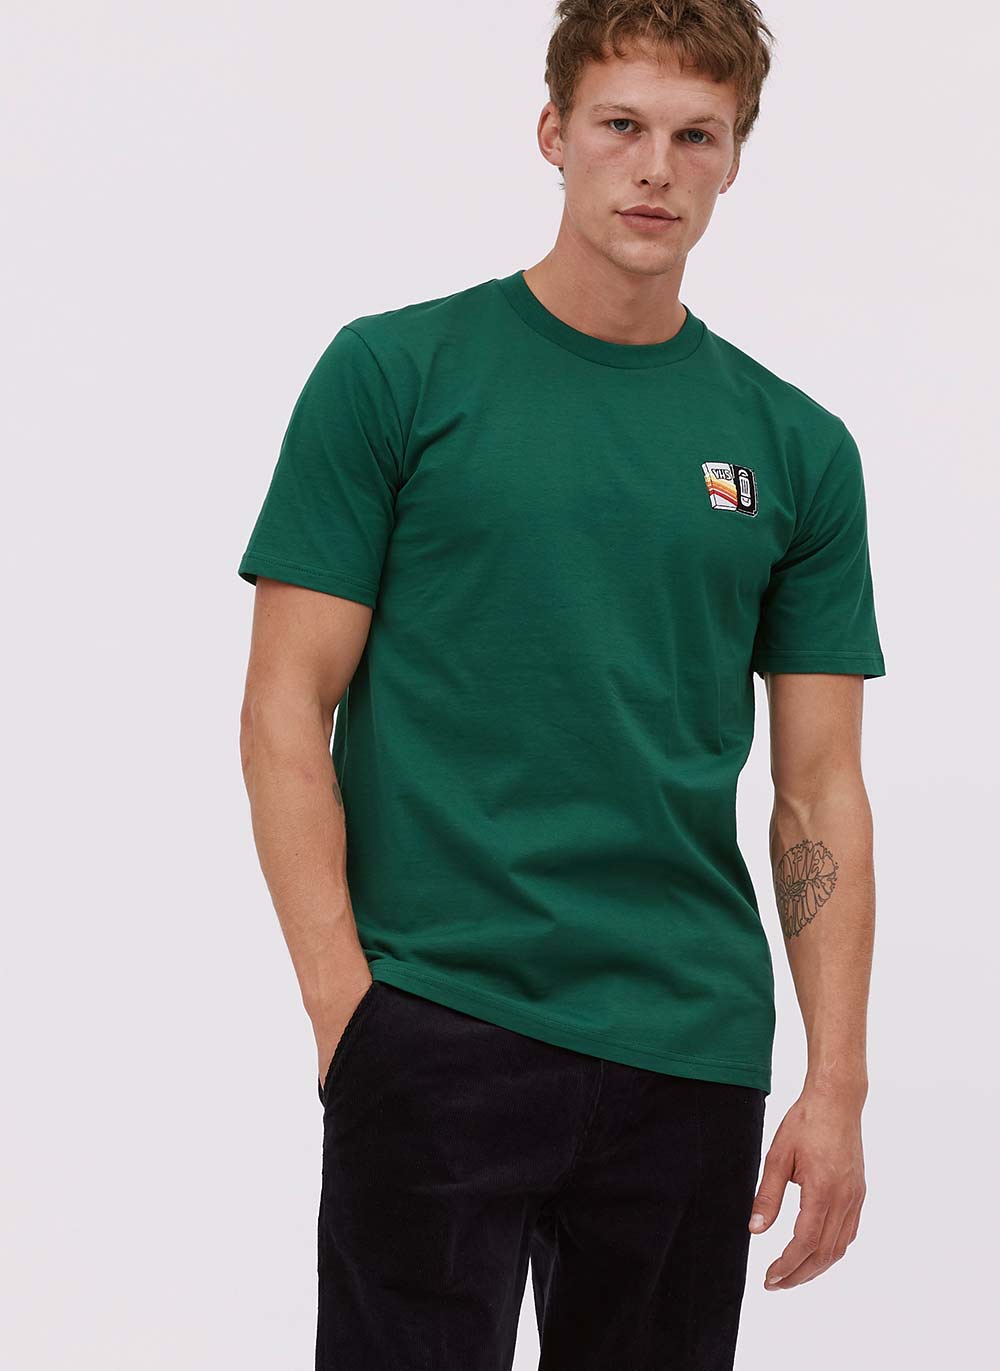 T Shirt | VHS | Emerald & Percival Menswear